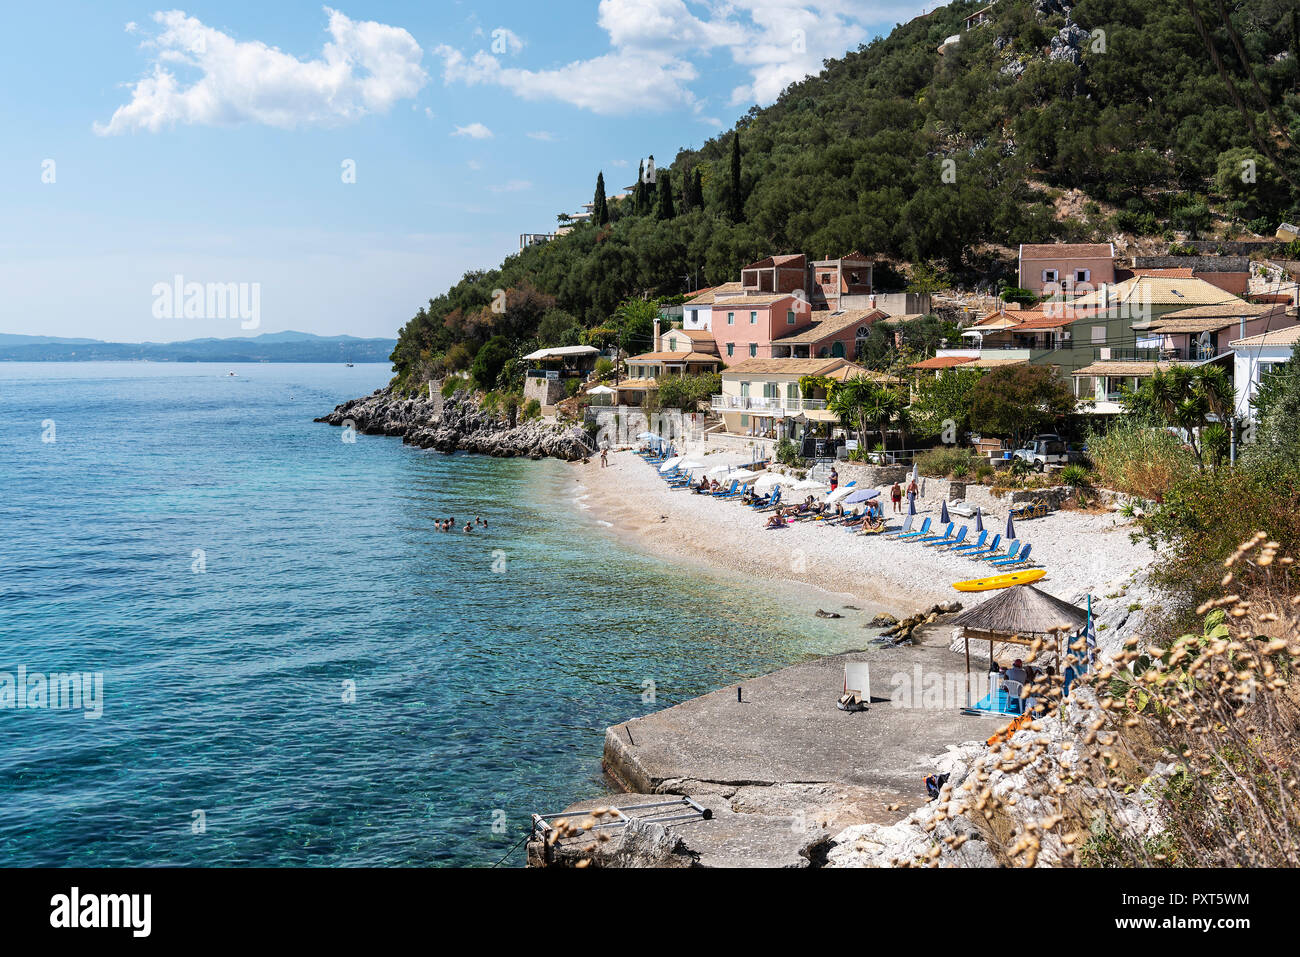 Kaminaki Beach, Nissaki, Corfu Island, Ionian Islands, Mediterranean Sea, Greece Stock Photo